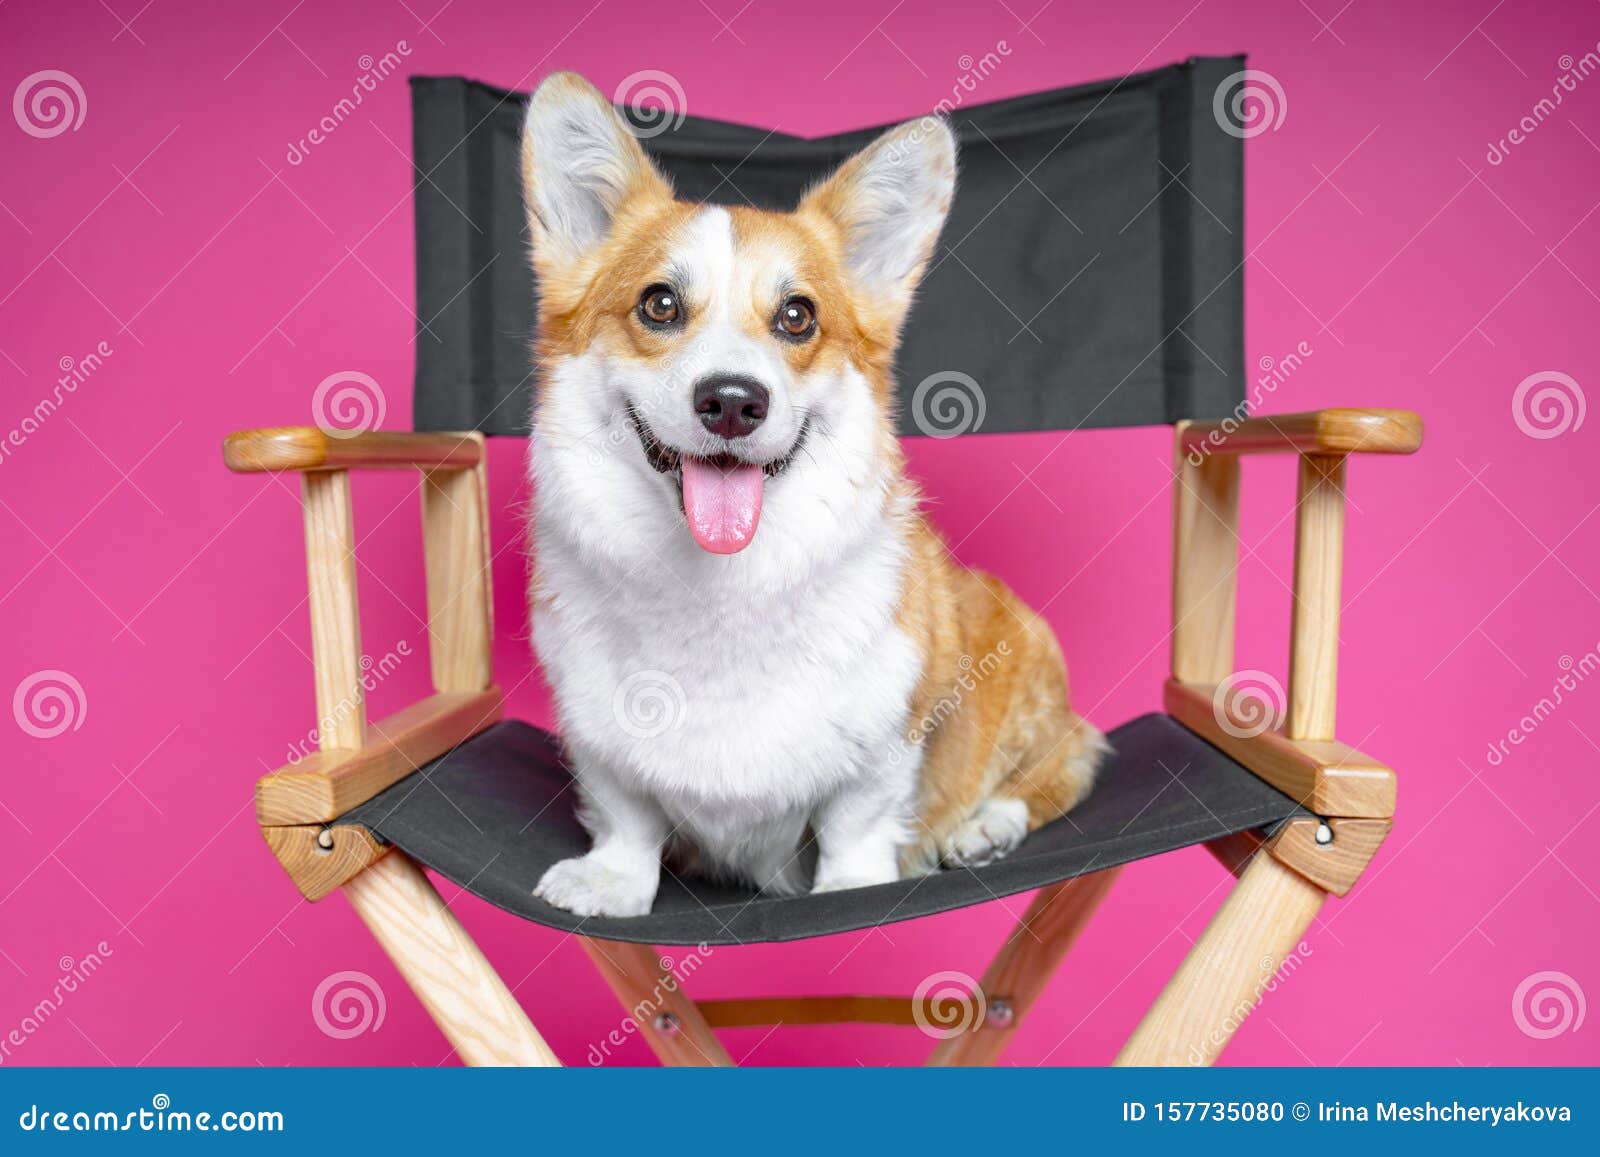 cute dog welsh pembroke corgi sits on a black directorÃ¢â¬â¢s armchair on a pink background